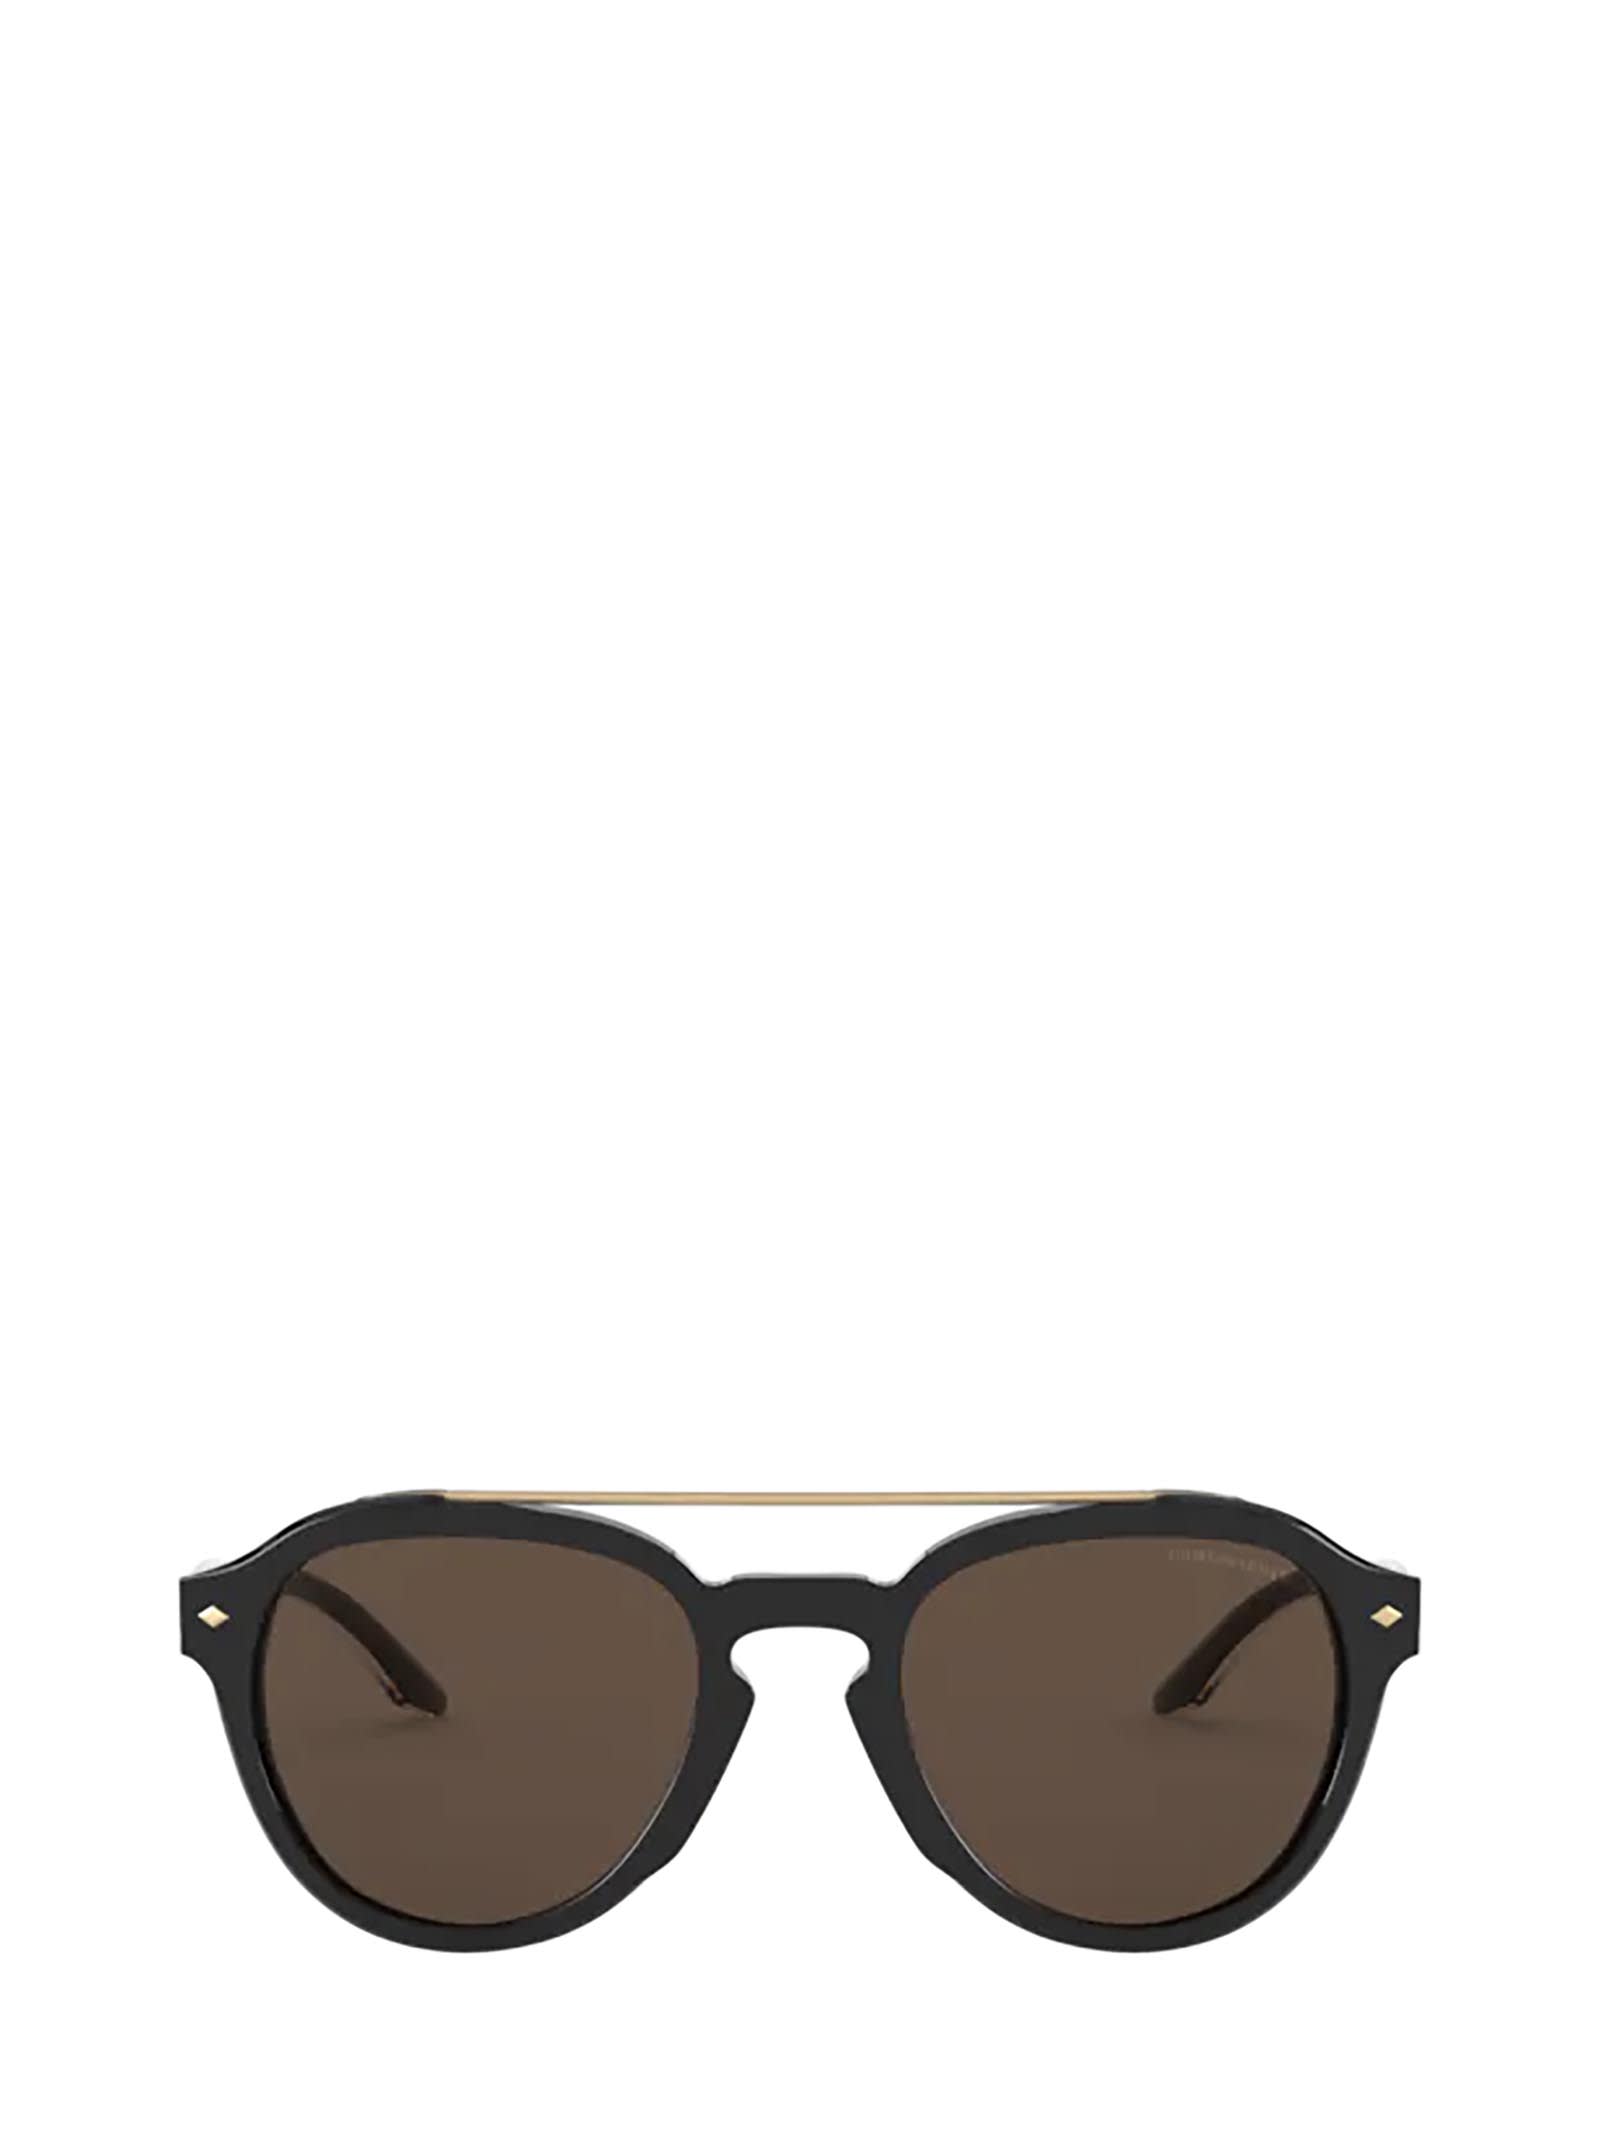 Giorgio Armani Giorgio Armani Ar2189 Black Sunglasses